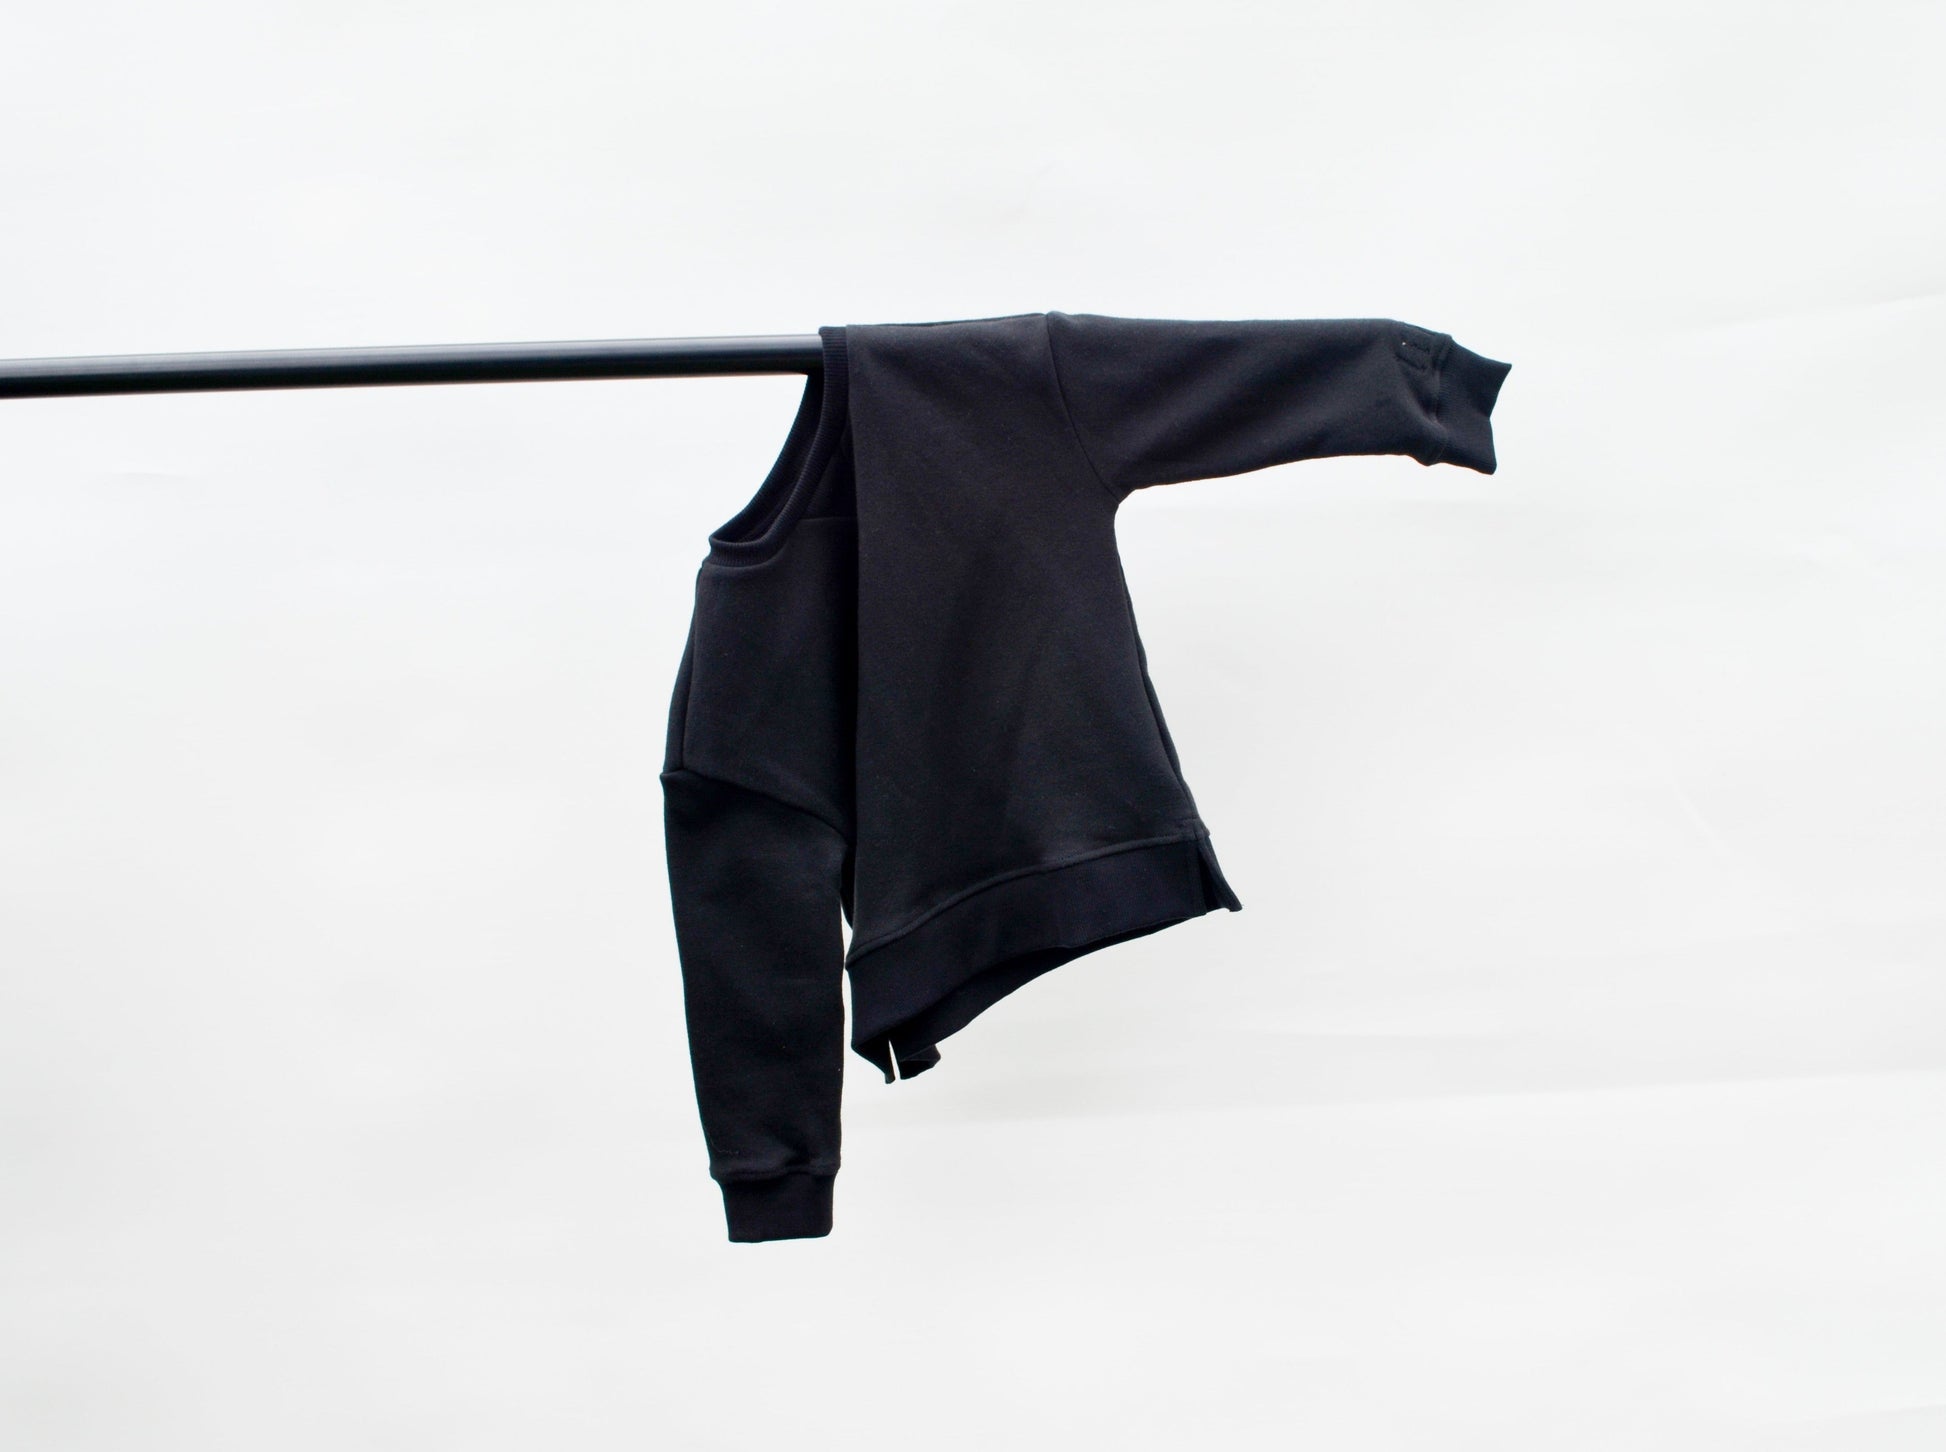 Black longline jumper hanging on a pole